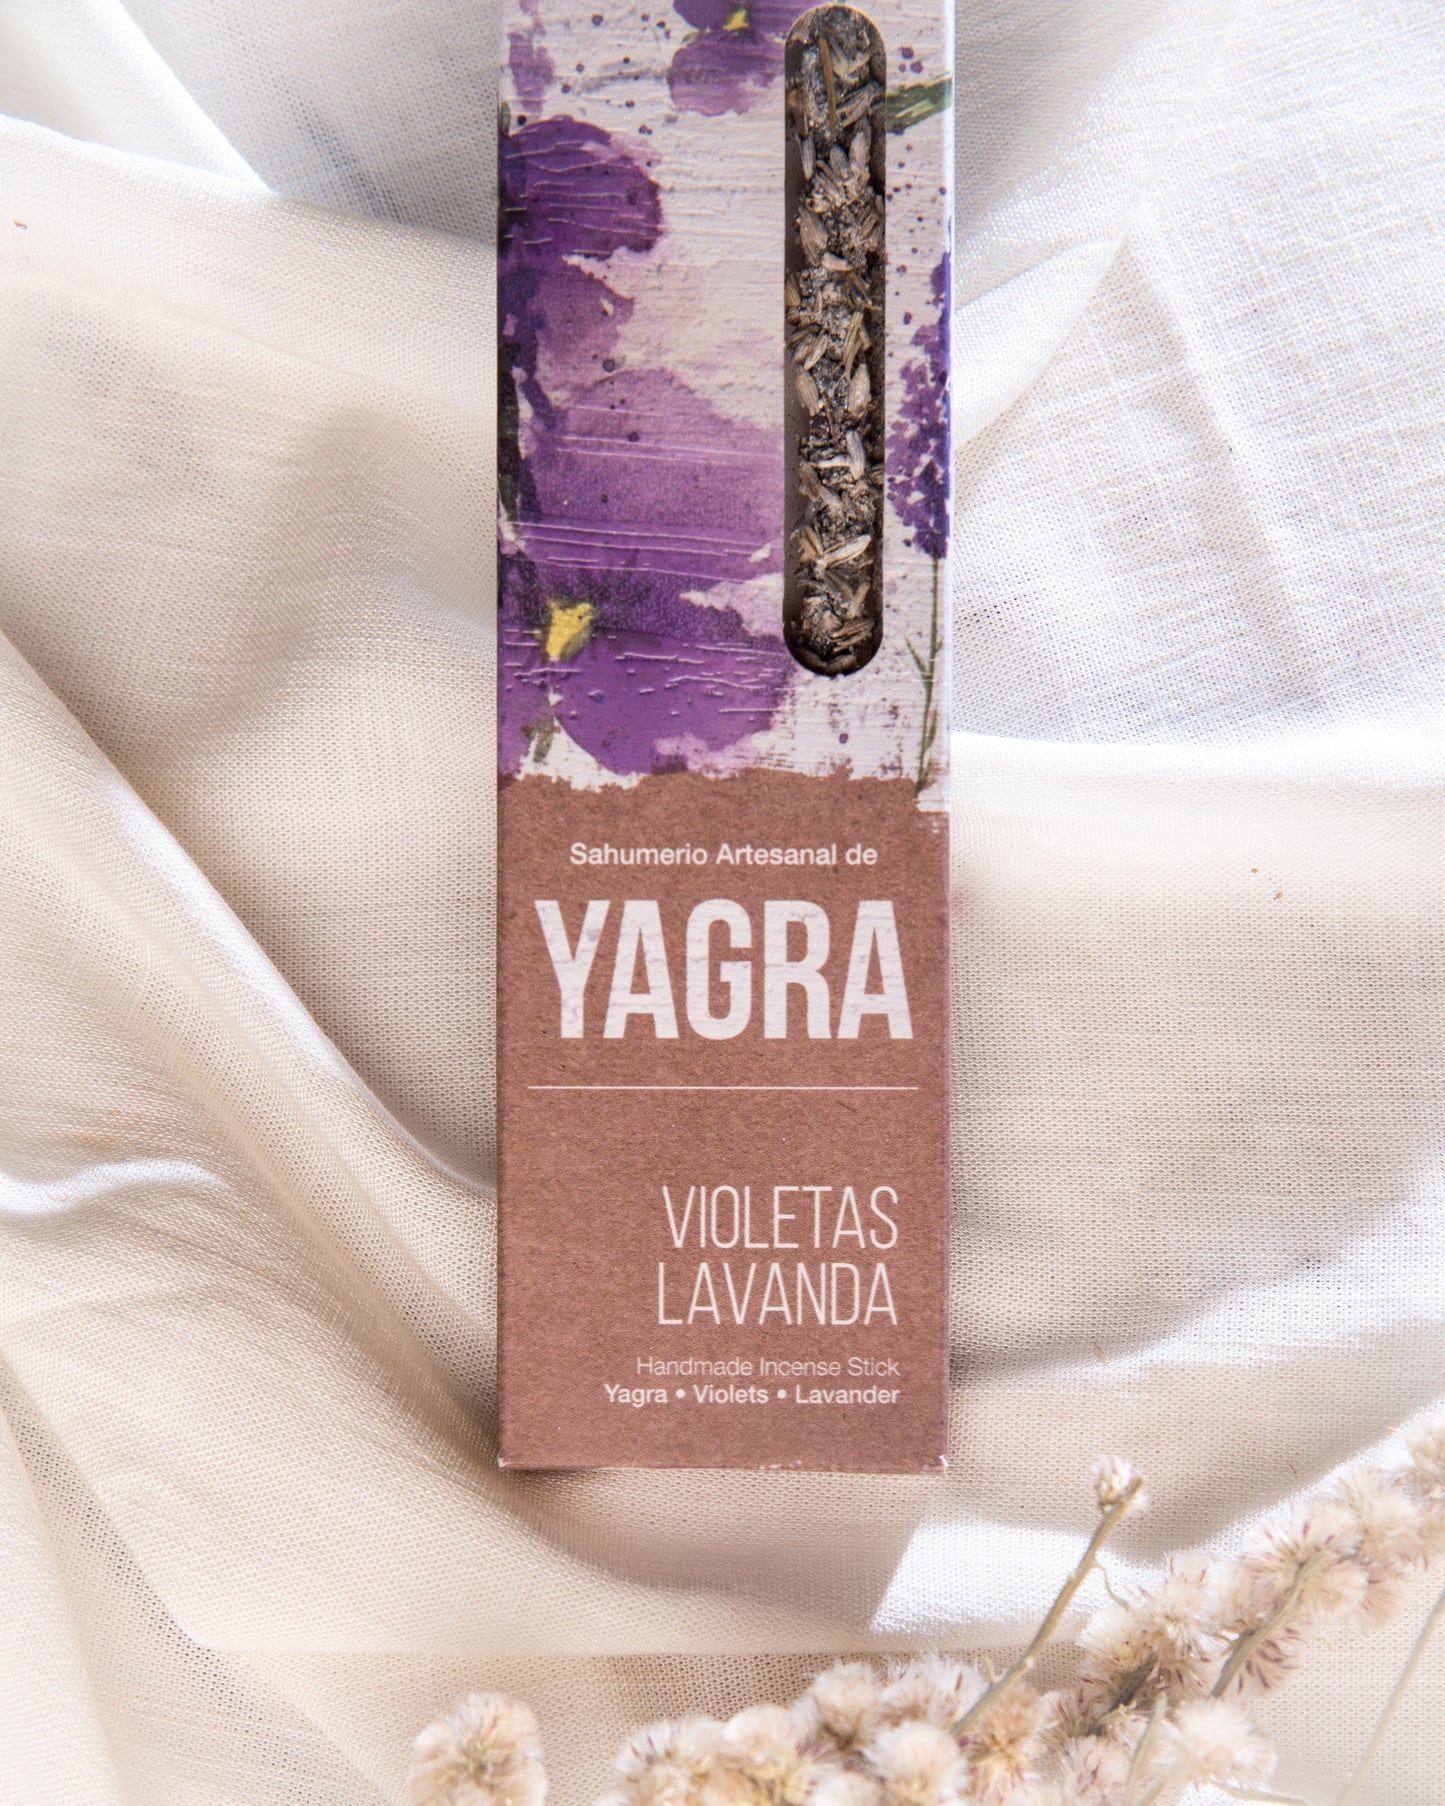 Yagra, Viol & Lavendel rökelsepinnar Sagrada Madre